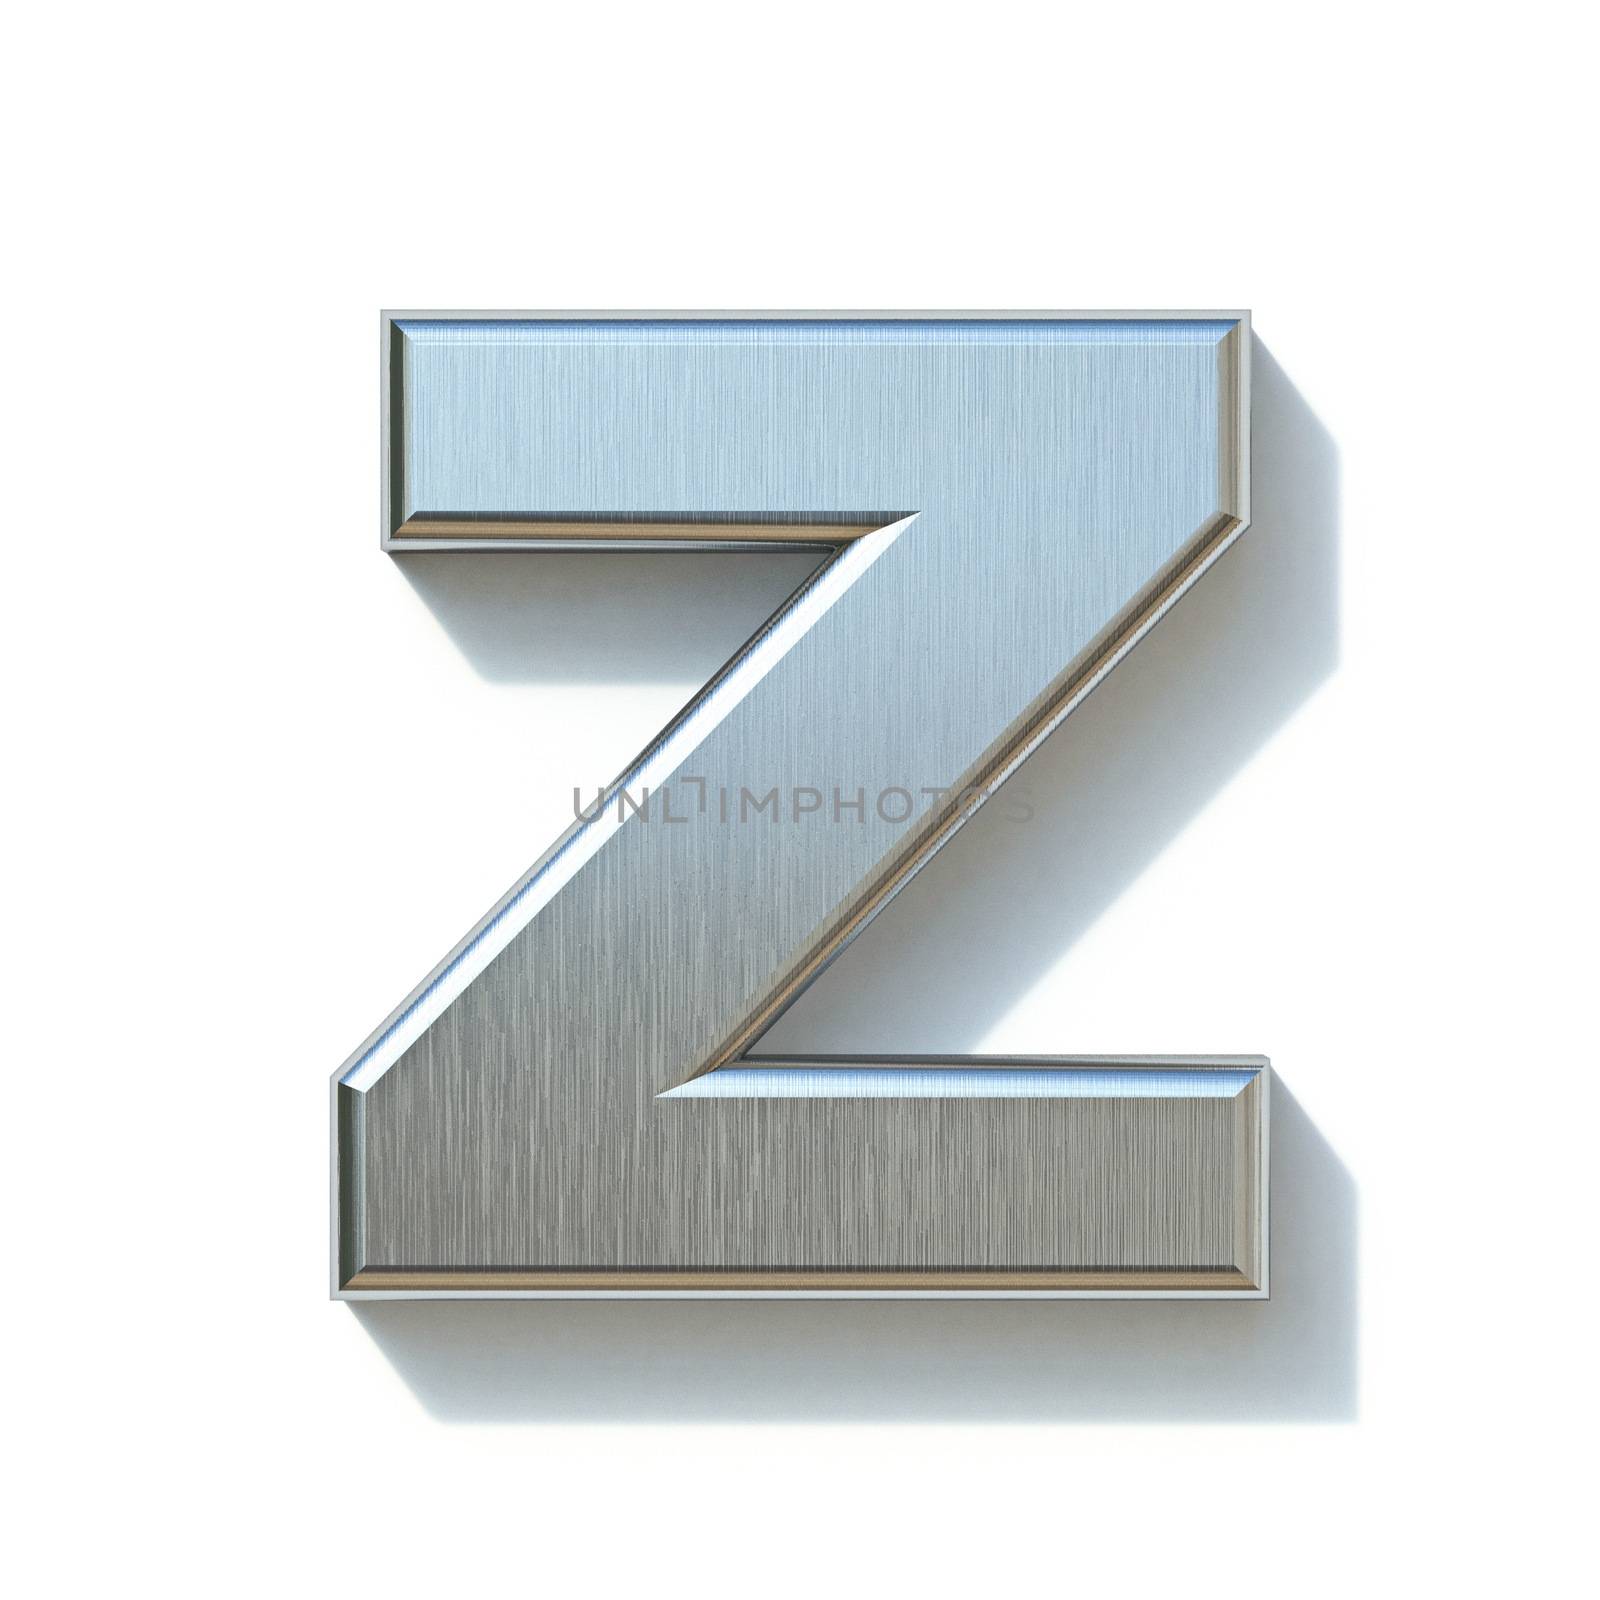 Brushed metal font Letter Z 3D render illustration isolated on white background